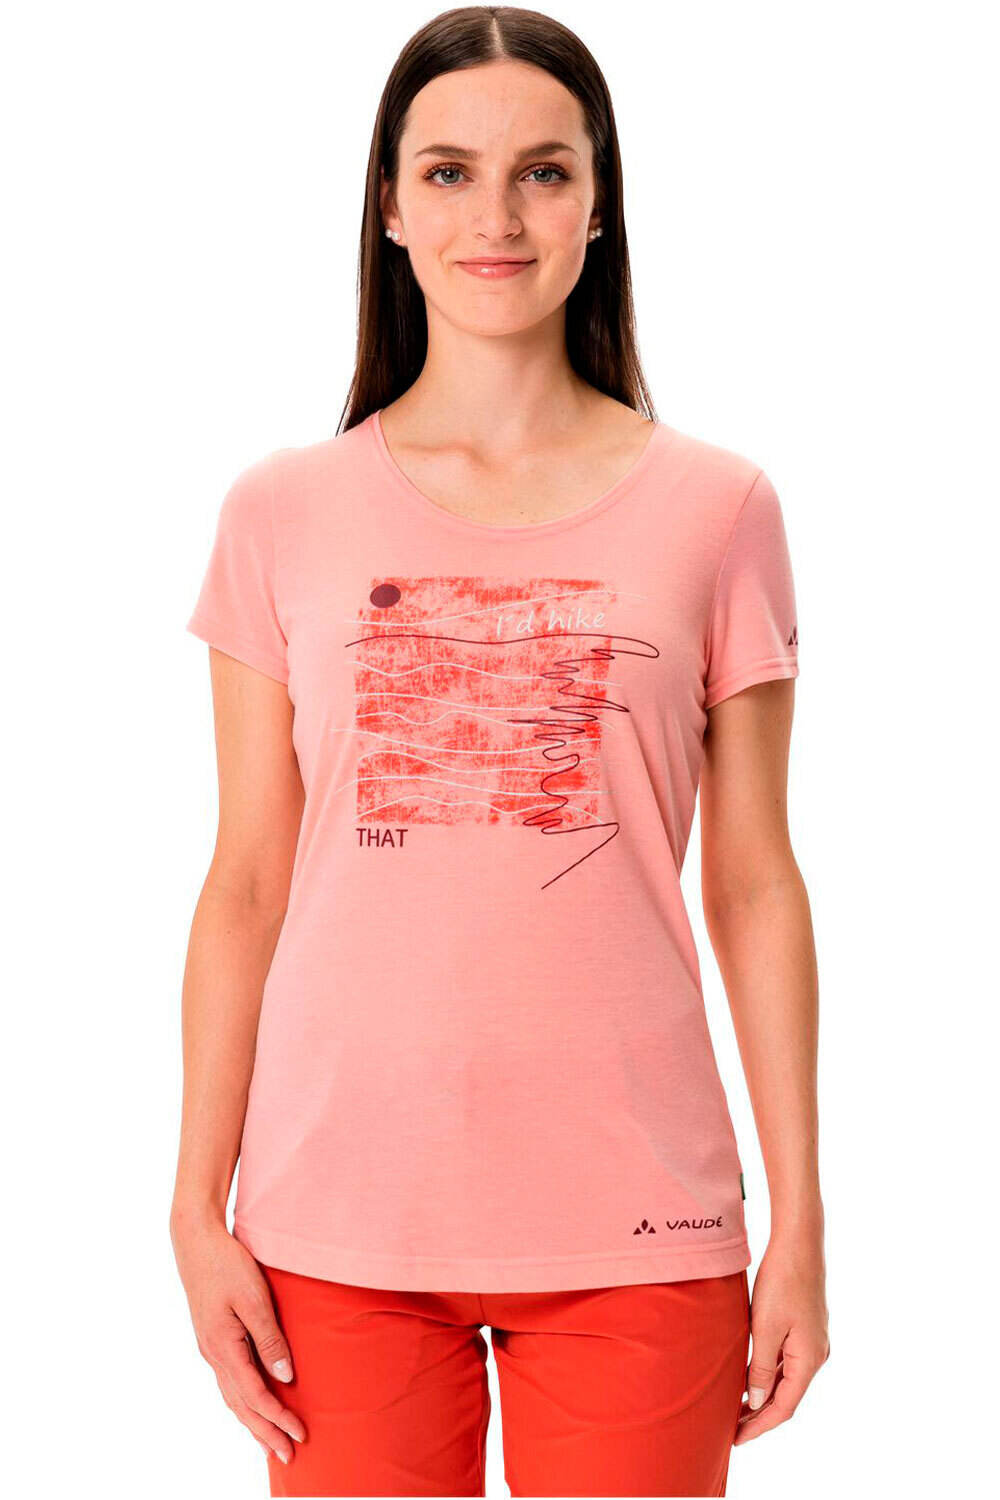 Vaude camiseta montaña manga corta mujer Women's Skomer Print T-Shirt II vista frontal